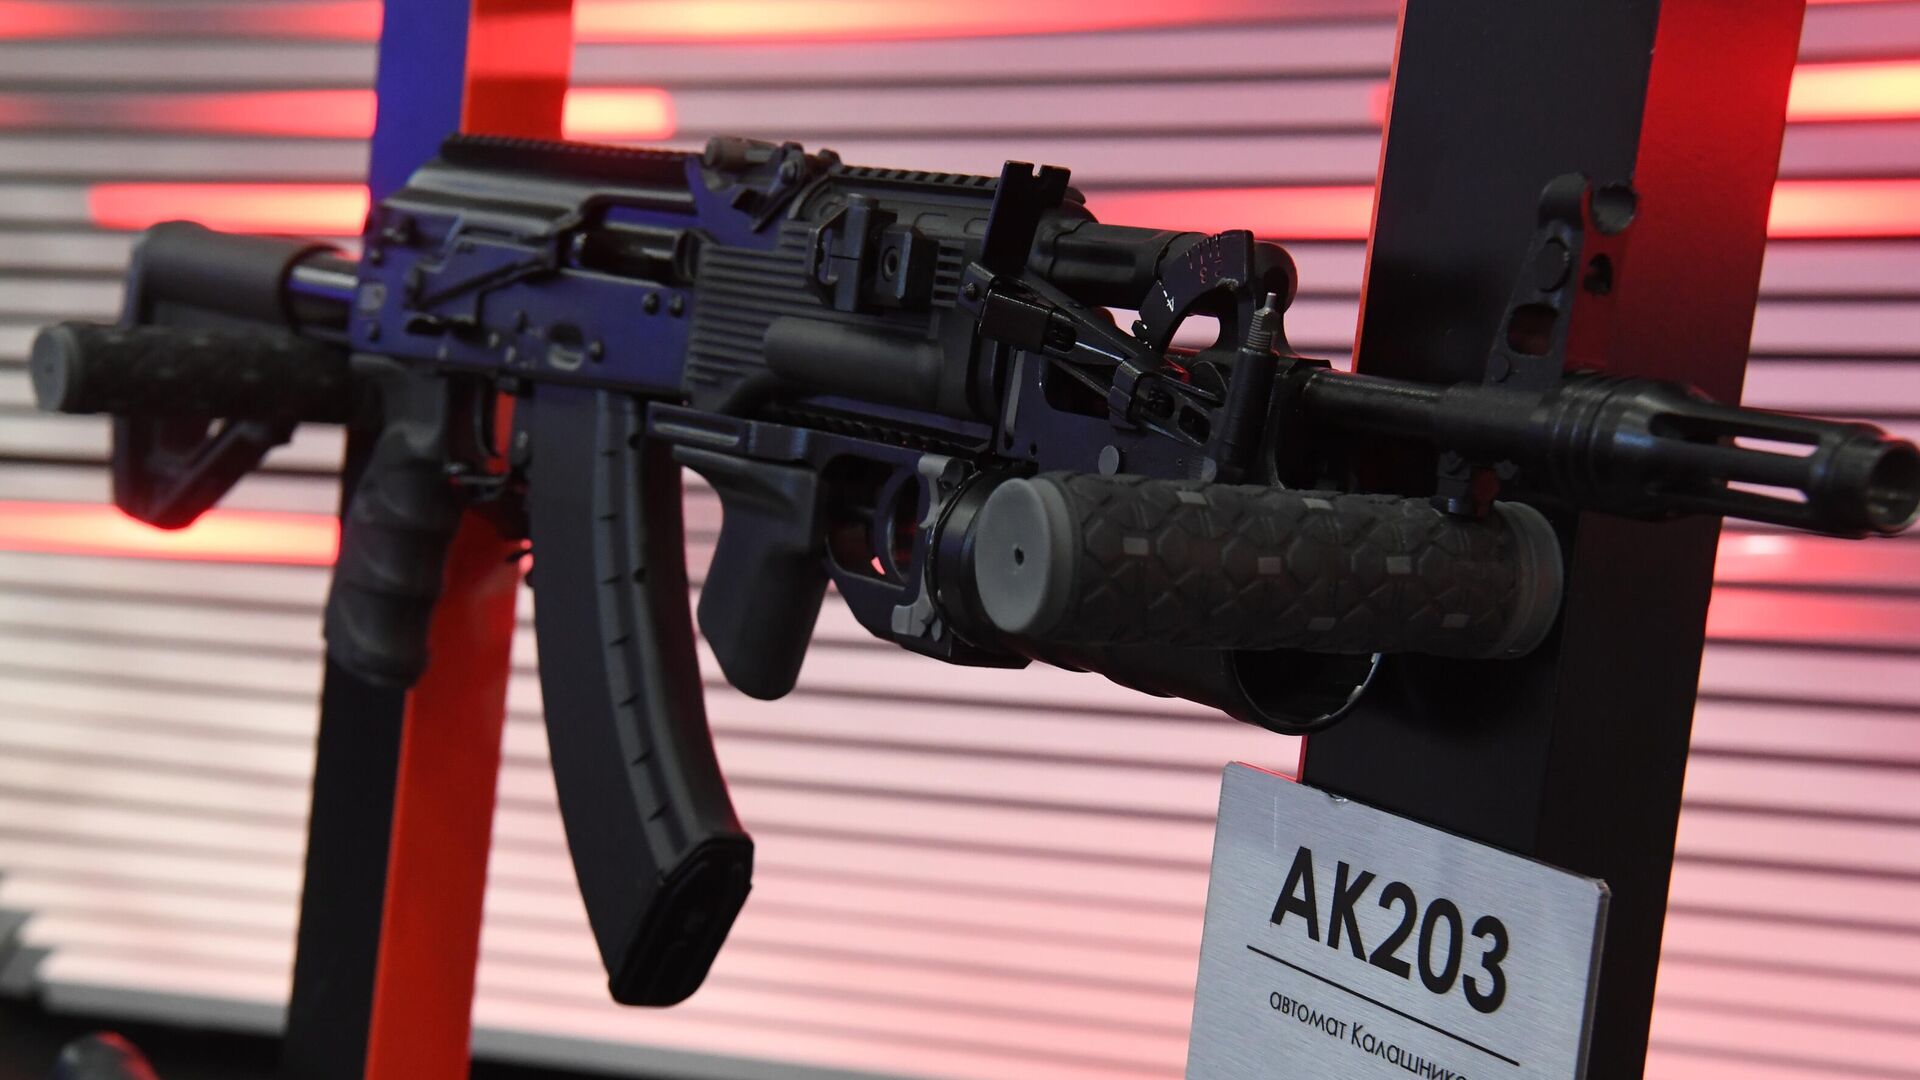 AK-203 assault rifle (Kalashnikov assault rifle) - 1920, 12/07/2021